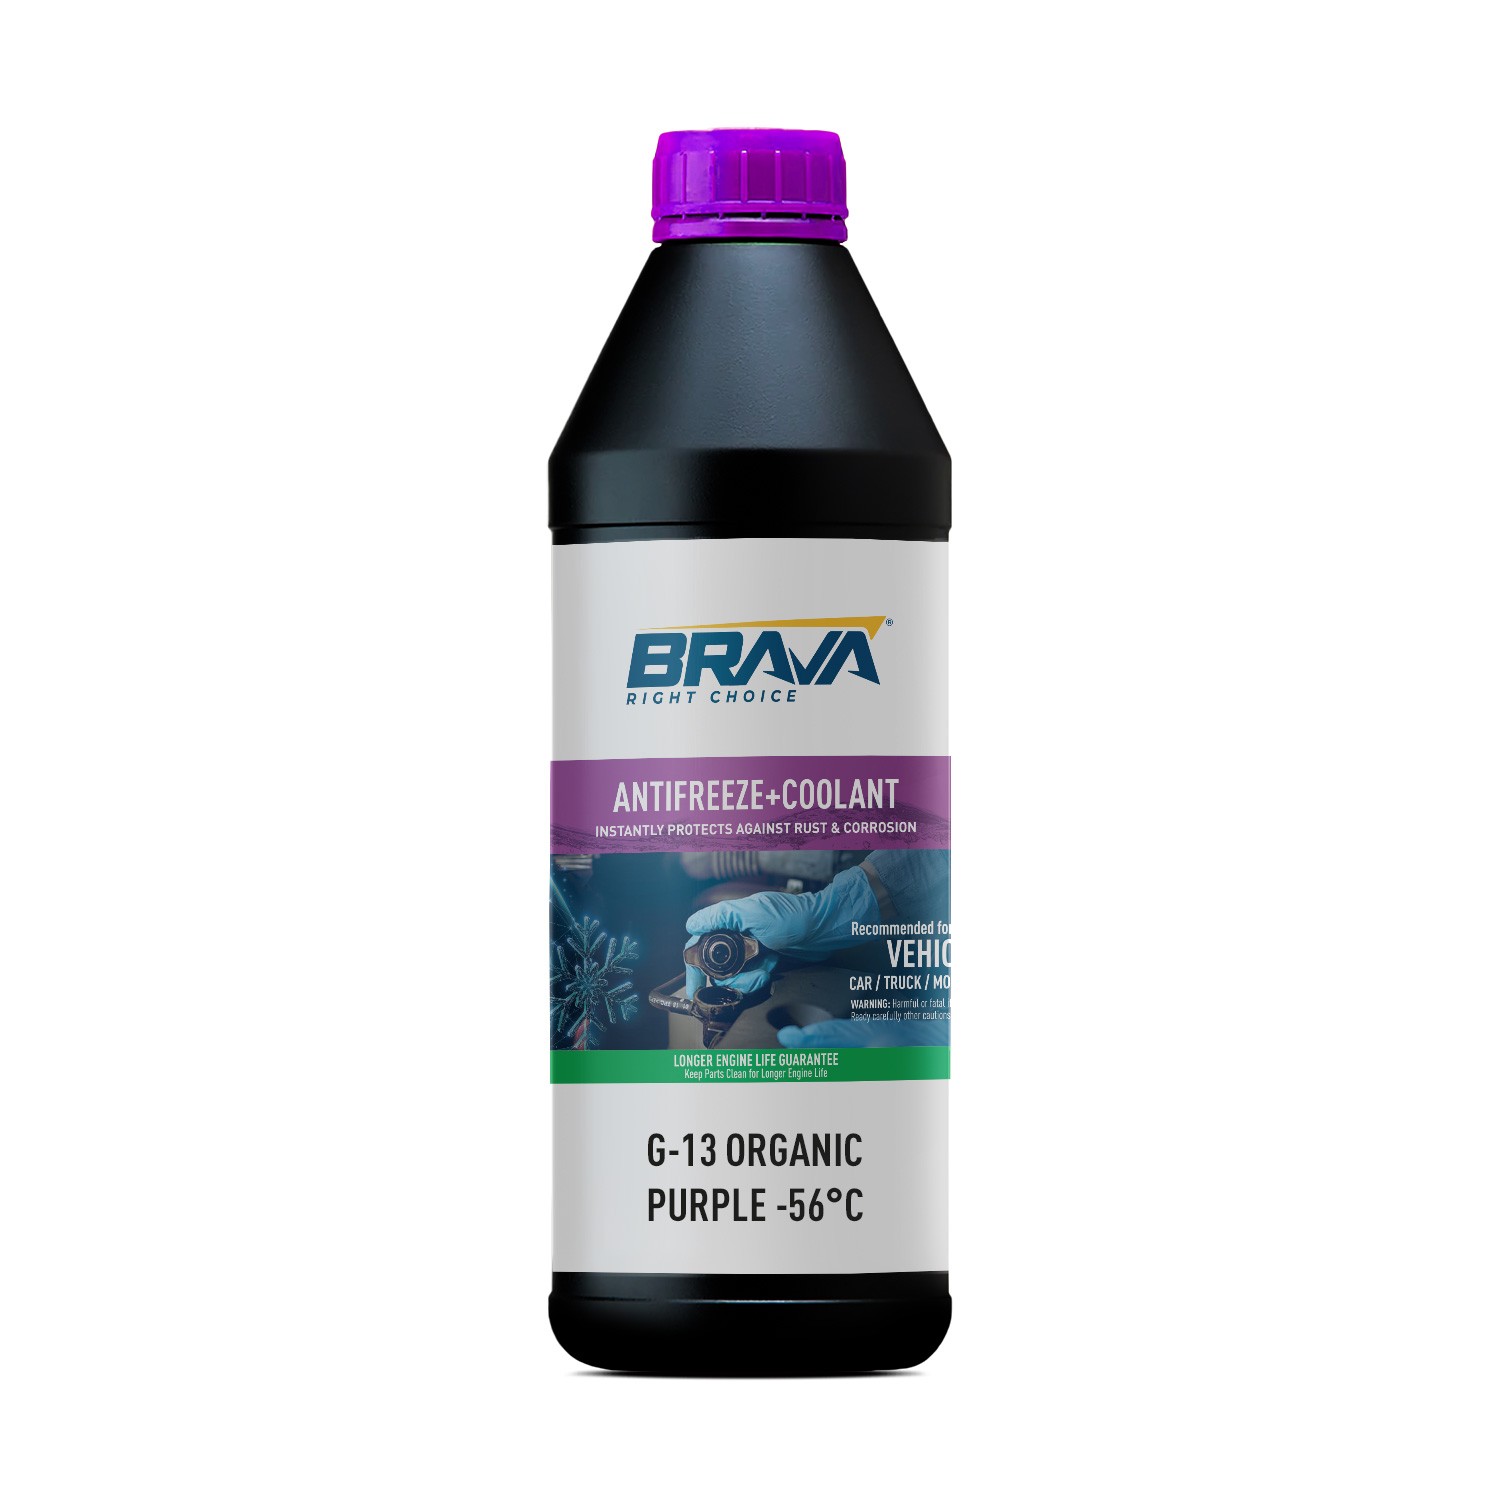 G-13 Organic Antifreeze Purple -56°C